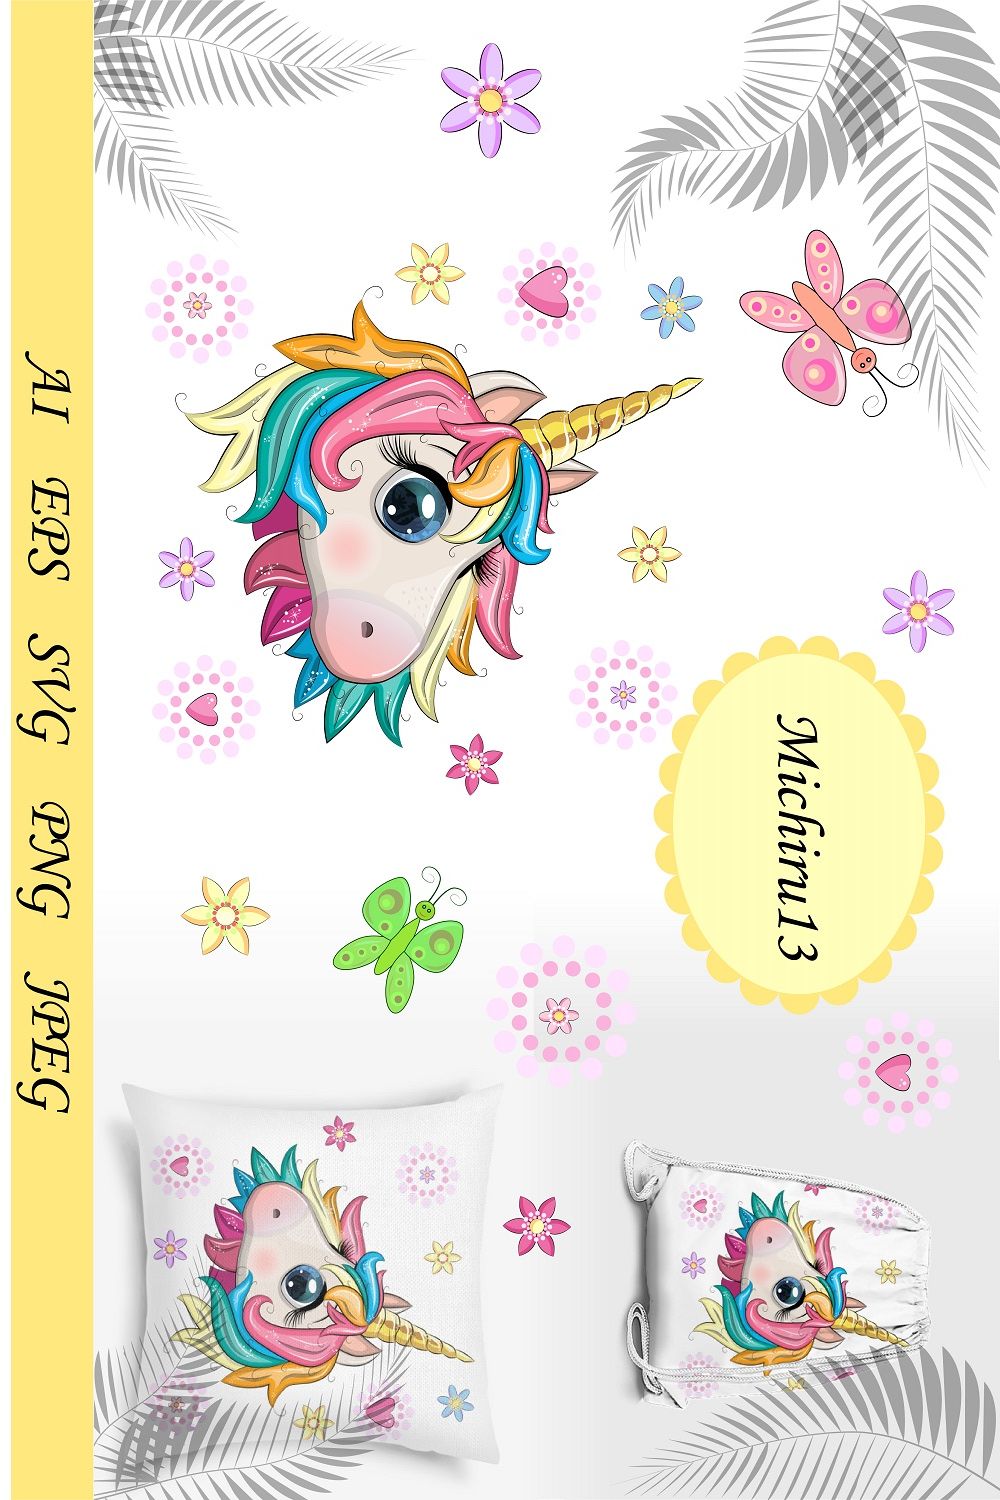 Cute Unicorn Face with Beautiful Eyes Rainbow Bangs Graphics Pinterest image.